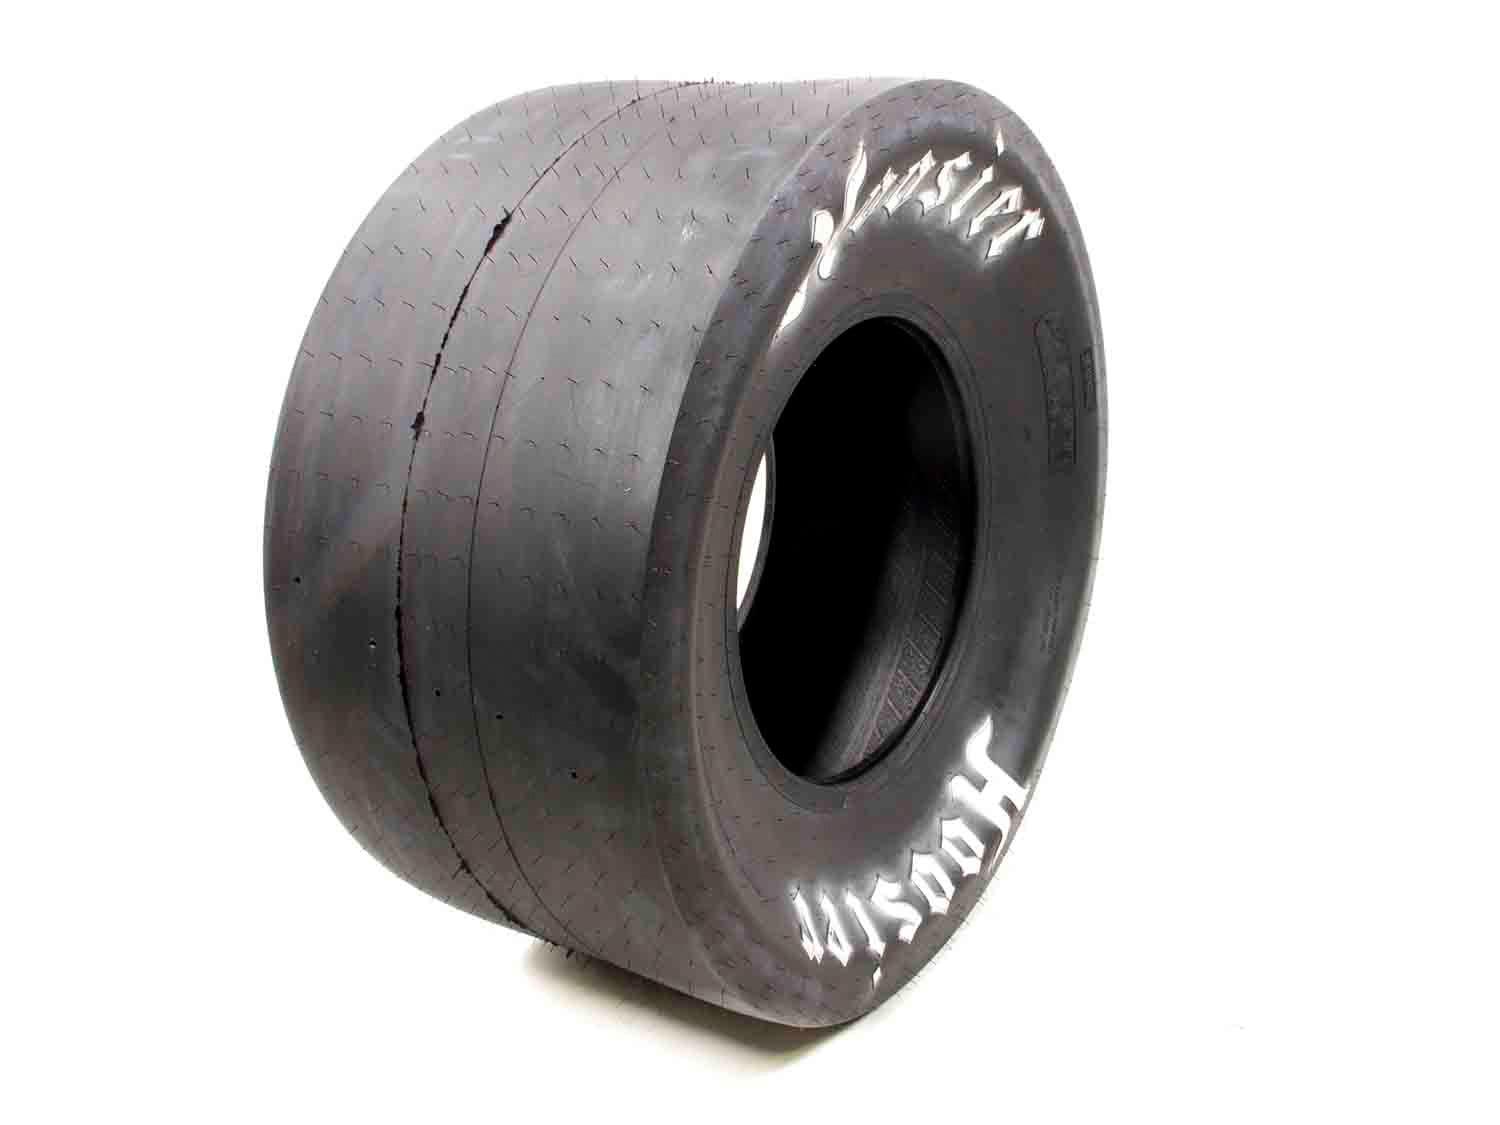 32.0/12-15 Drag Tire - Burlile Performance Products